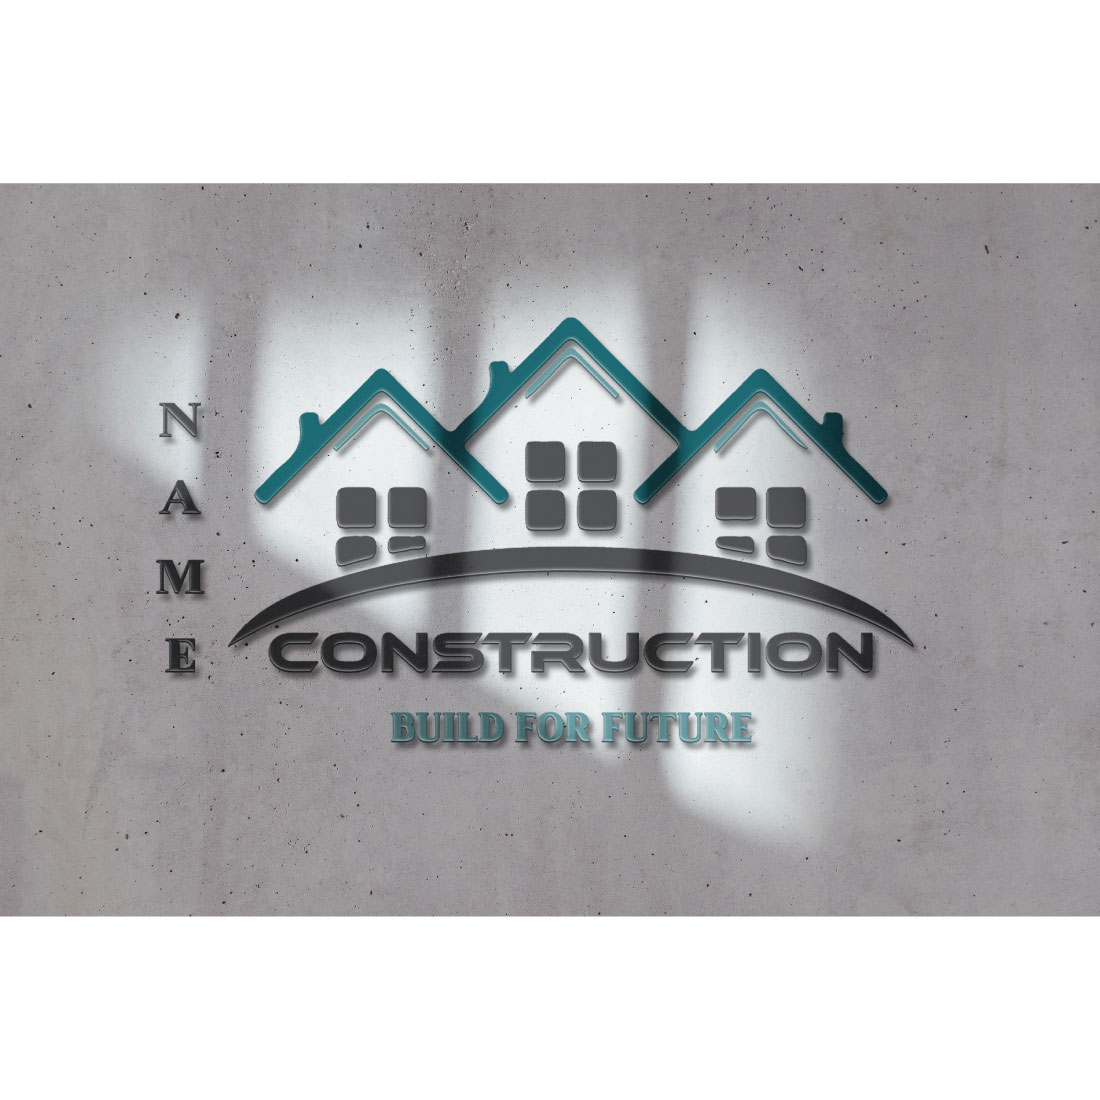 Construction logo design preview image.